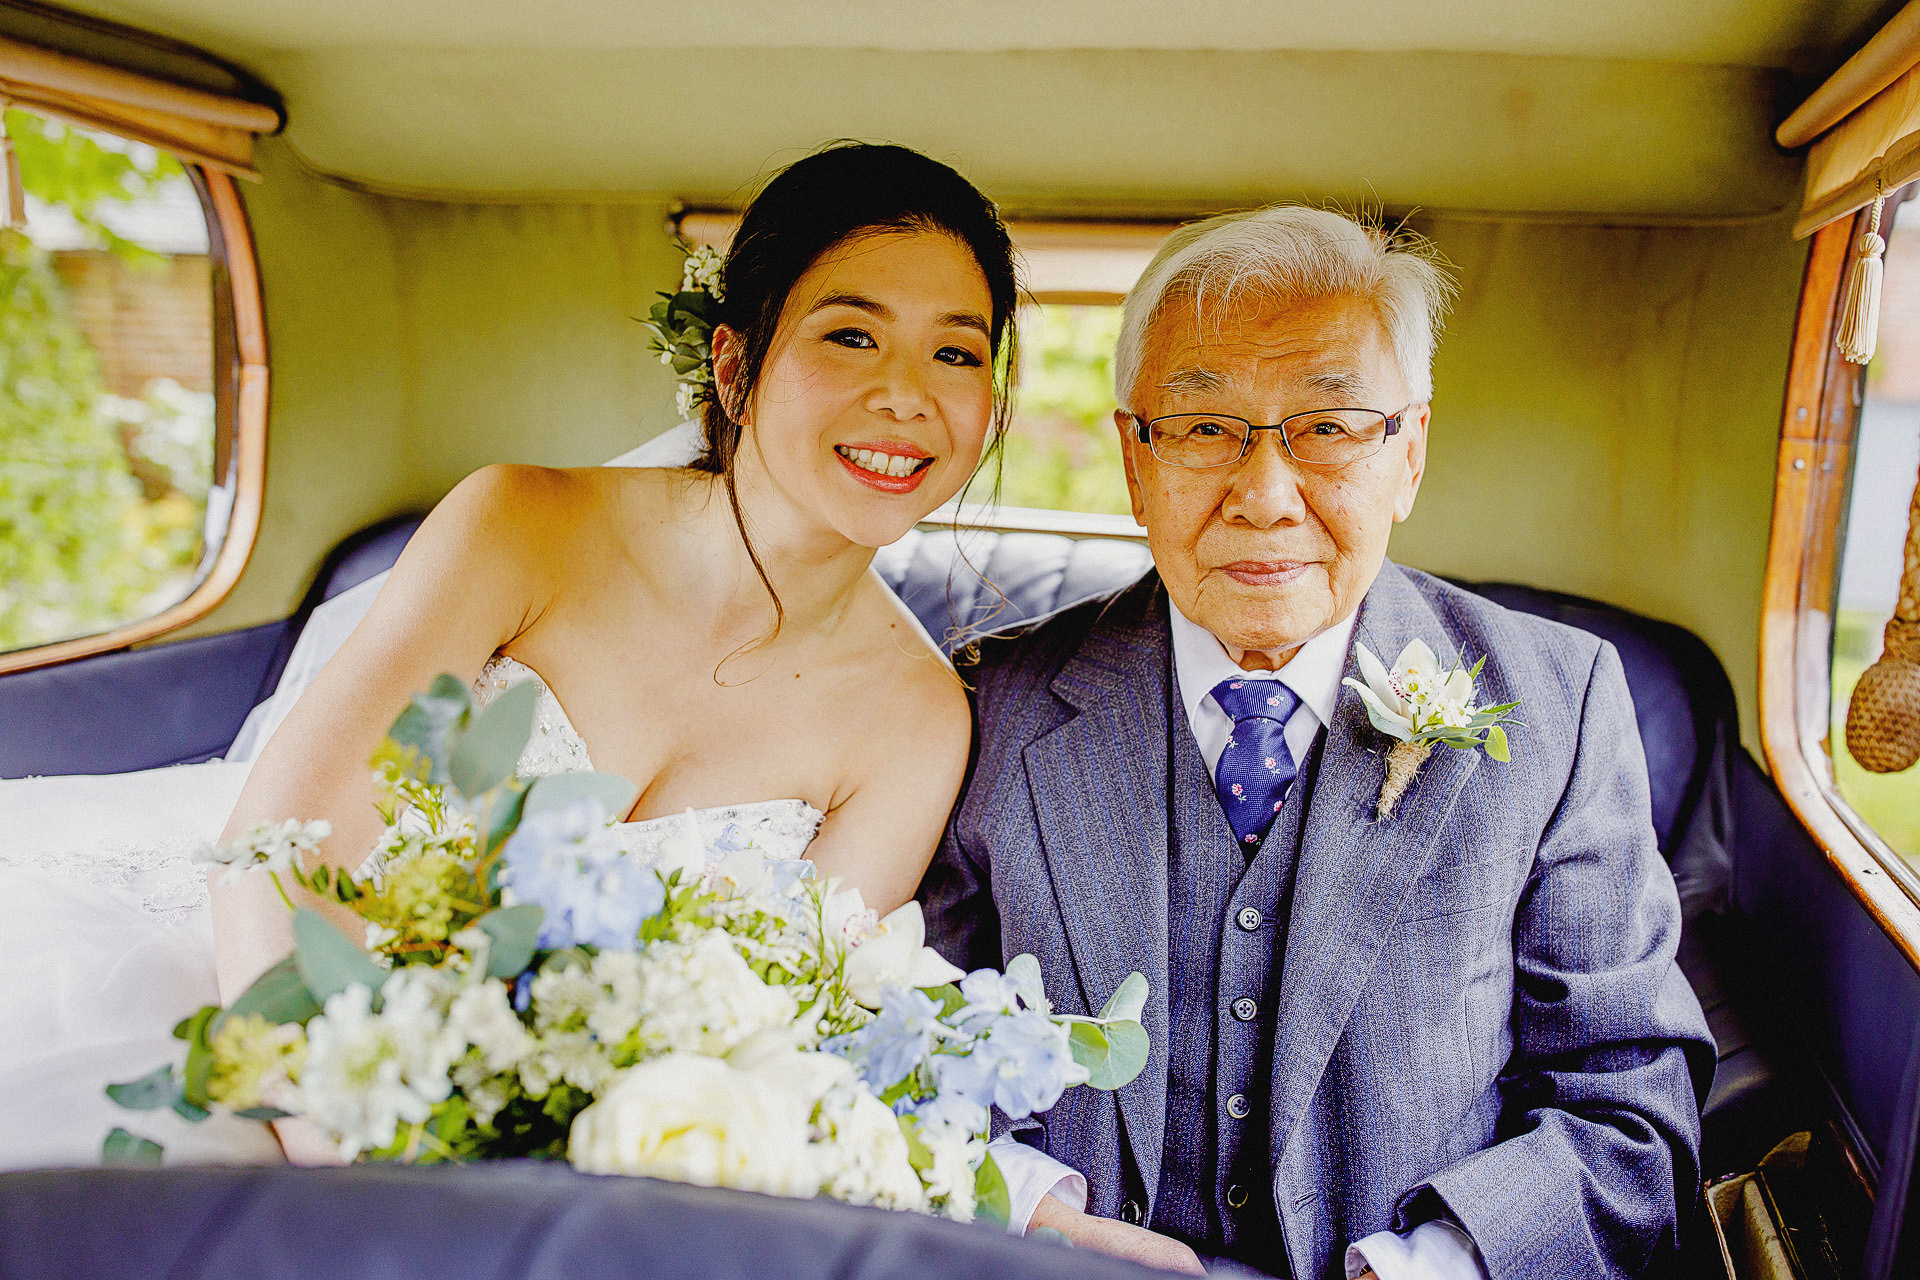 kiki and her grandfather at the wedding 